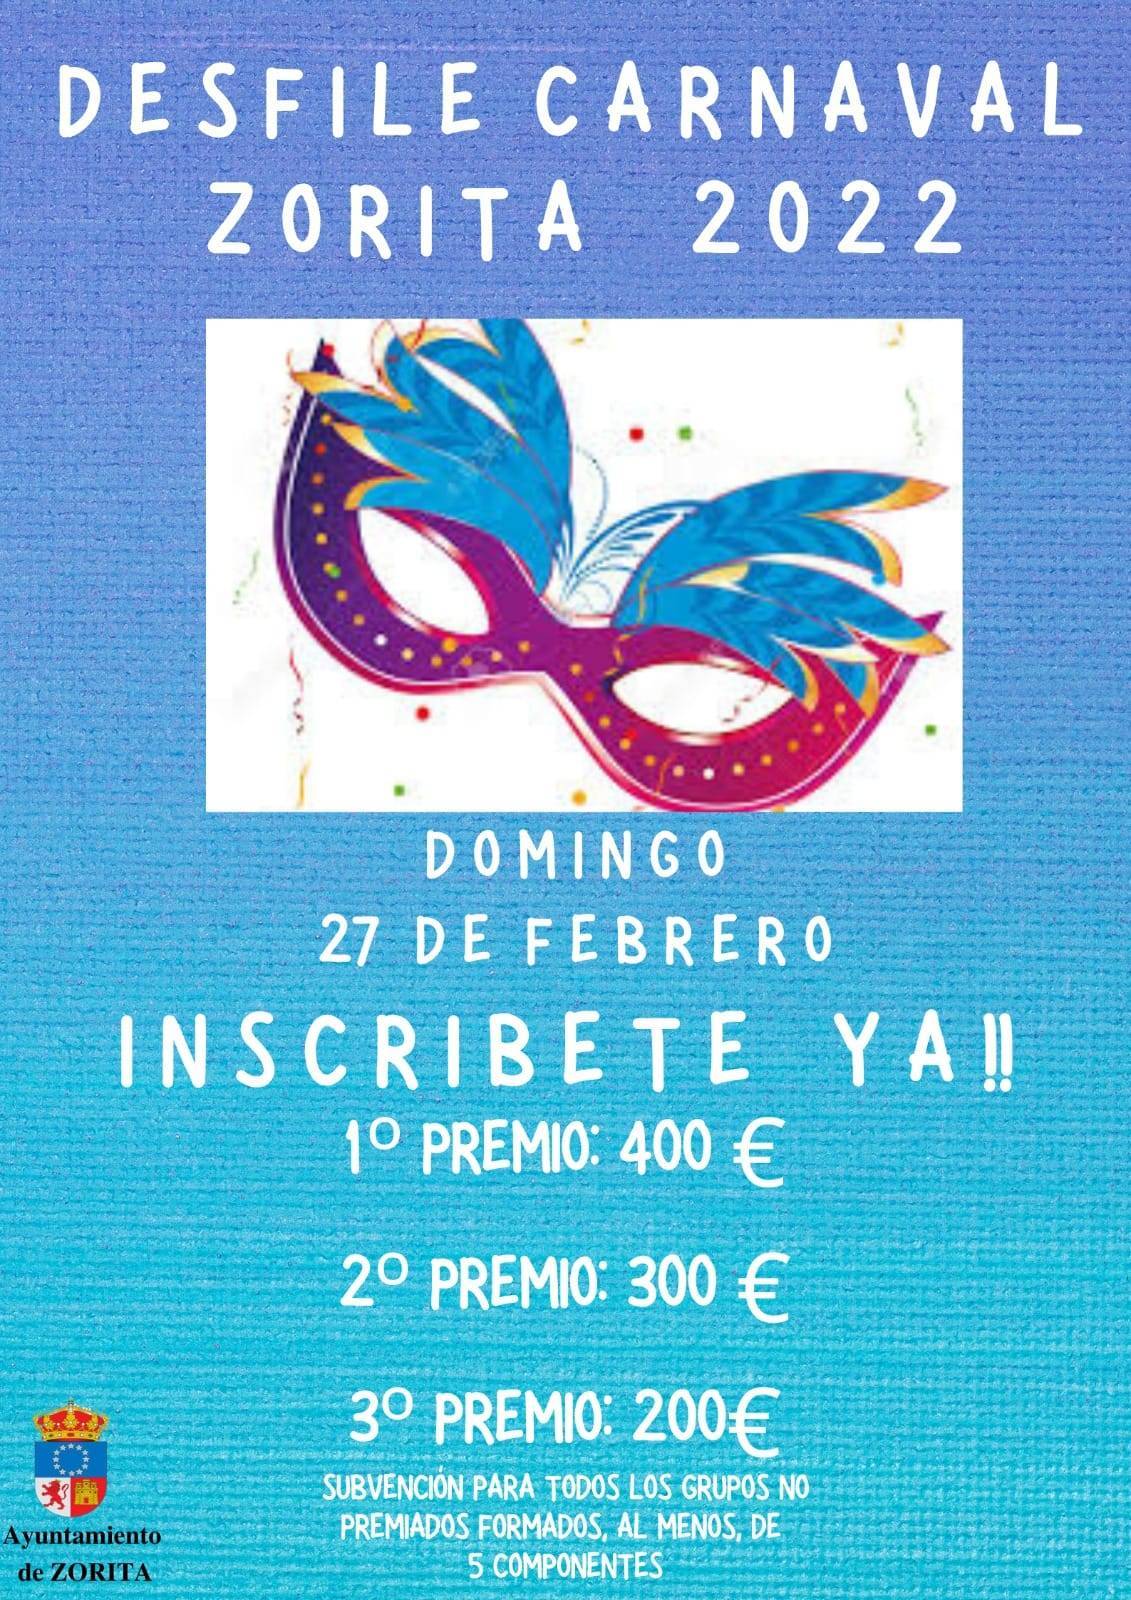 Carnaval (2022) - Zorita (Cáceres) 5